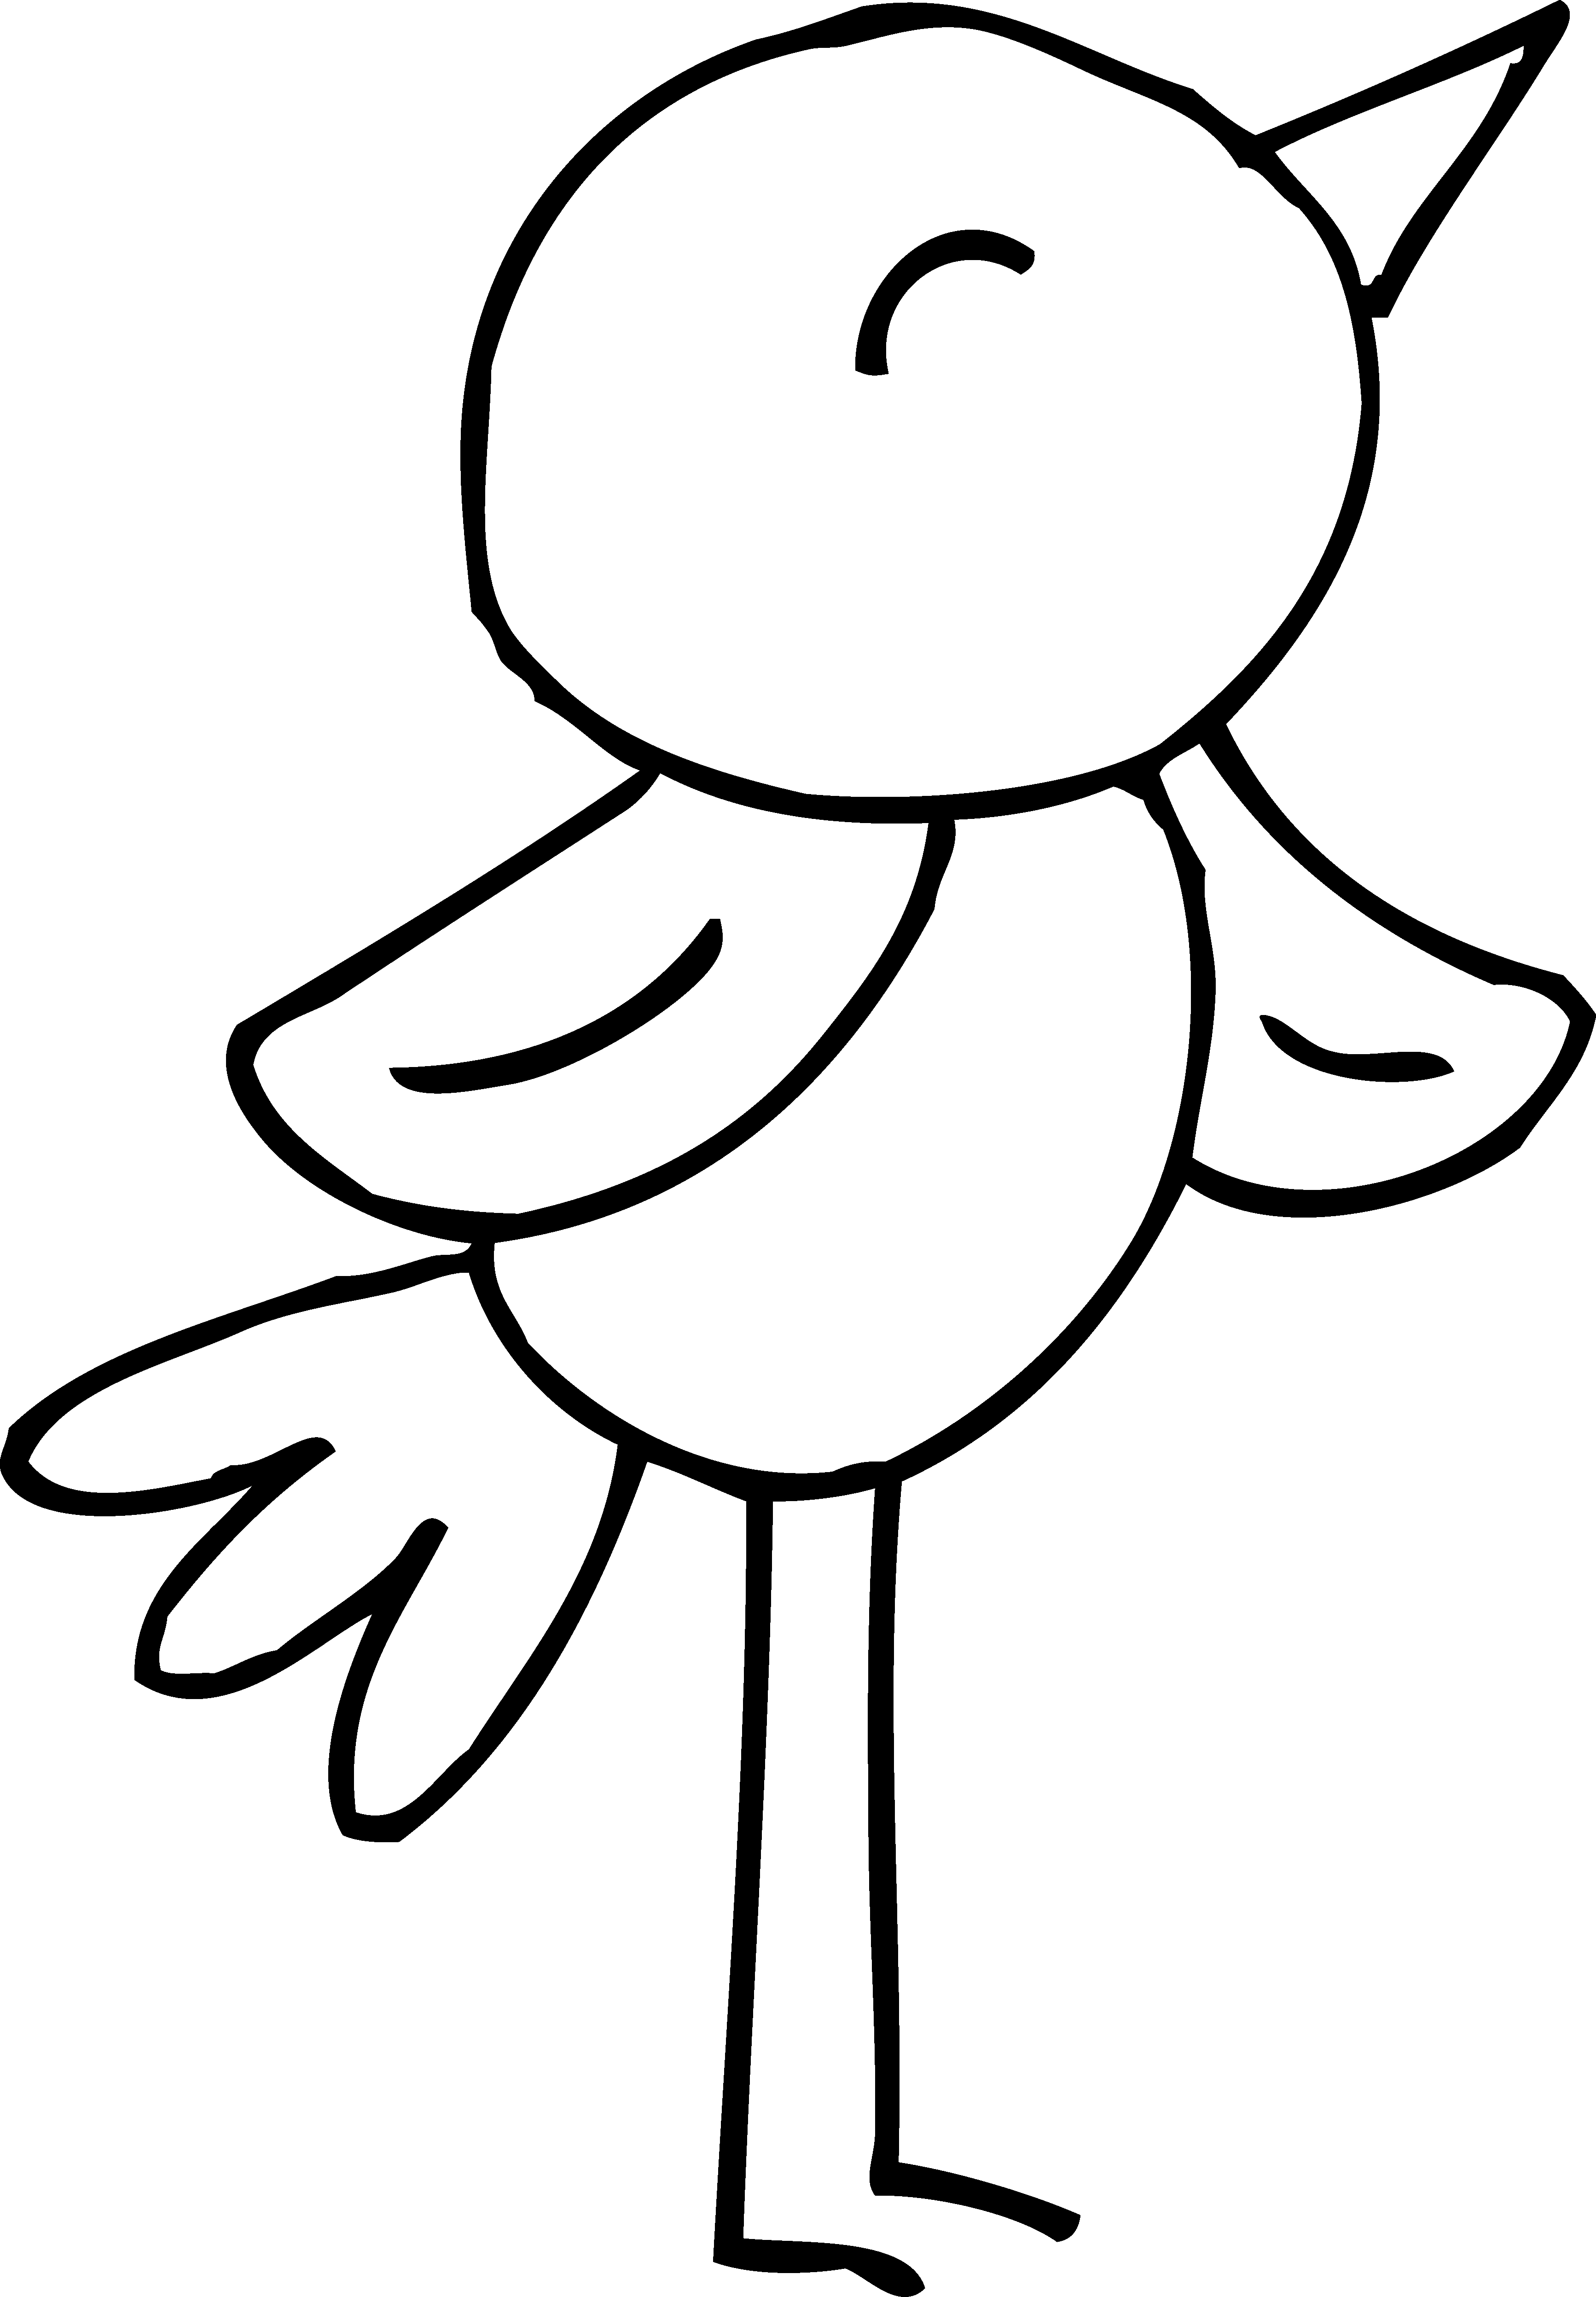 Black and white cute bird clipart